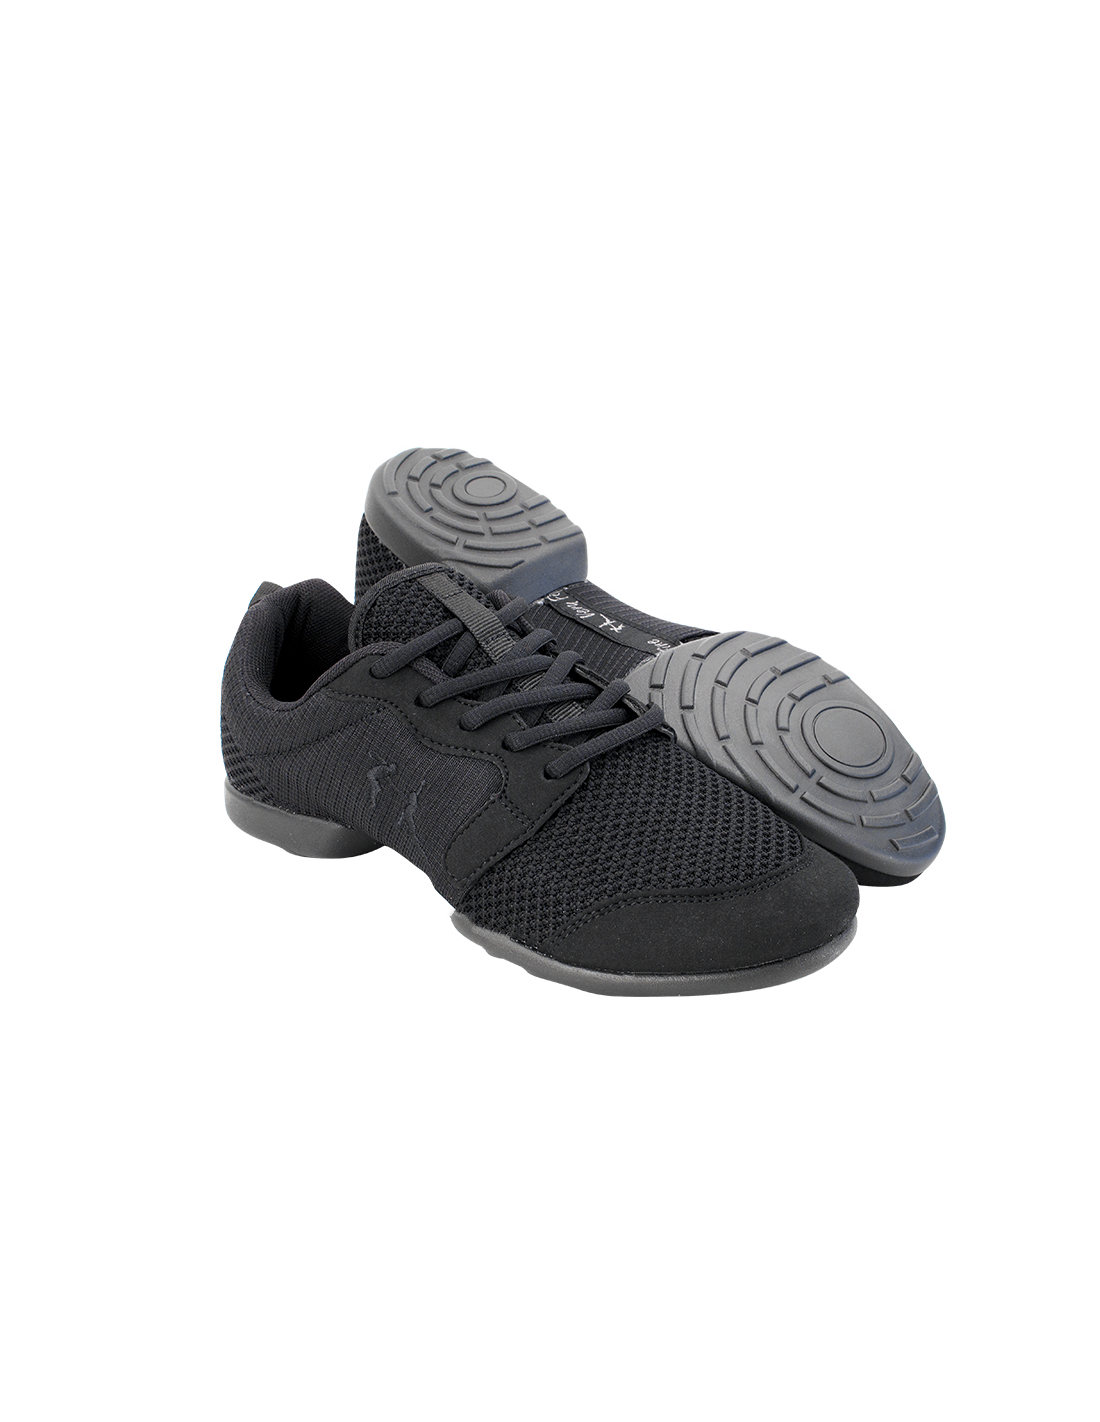 Dance sneaker in black mesh with split PVC sole for salsa, linedance ...